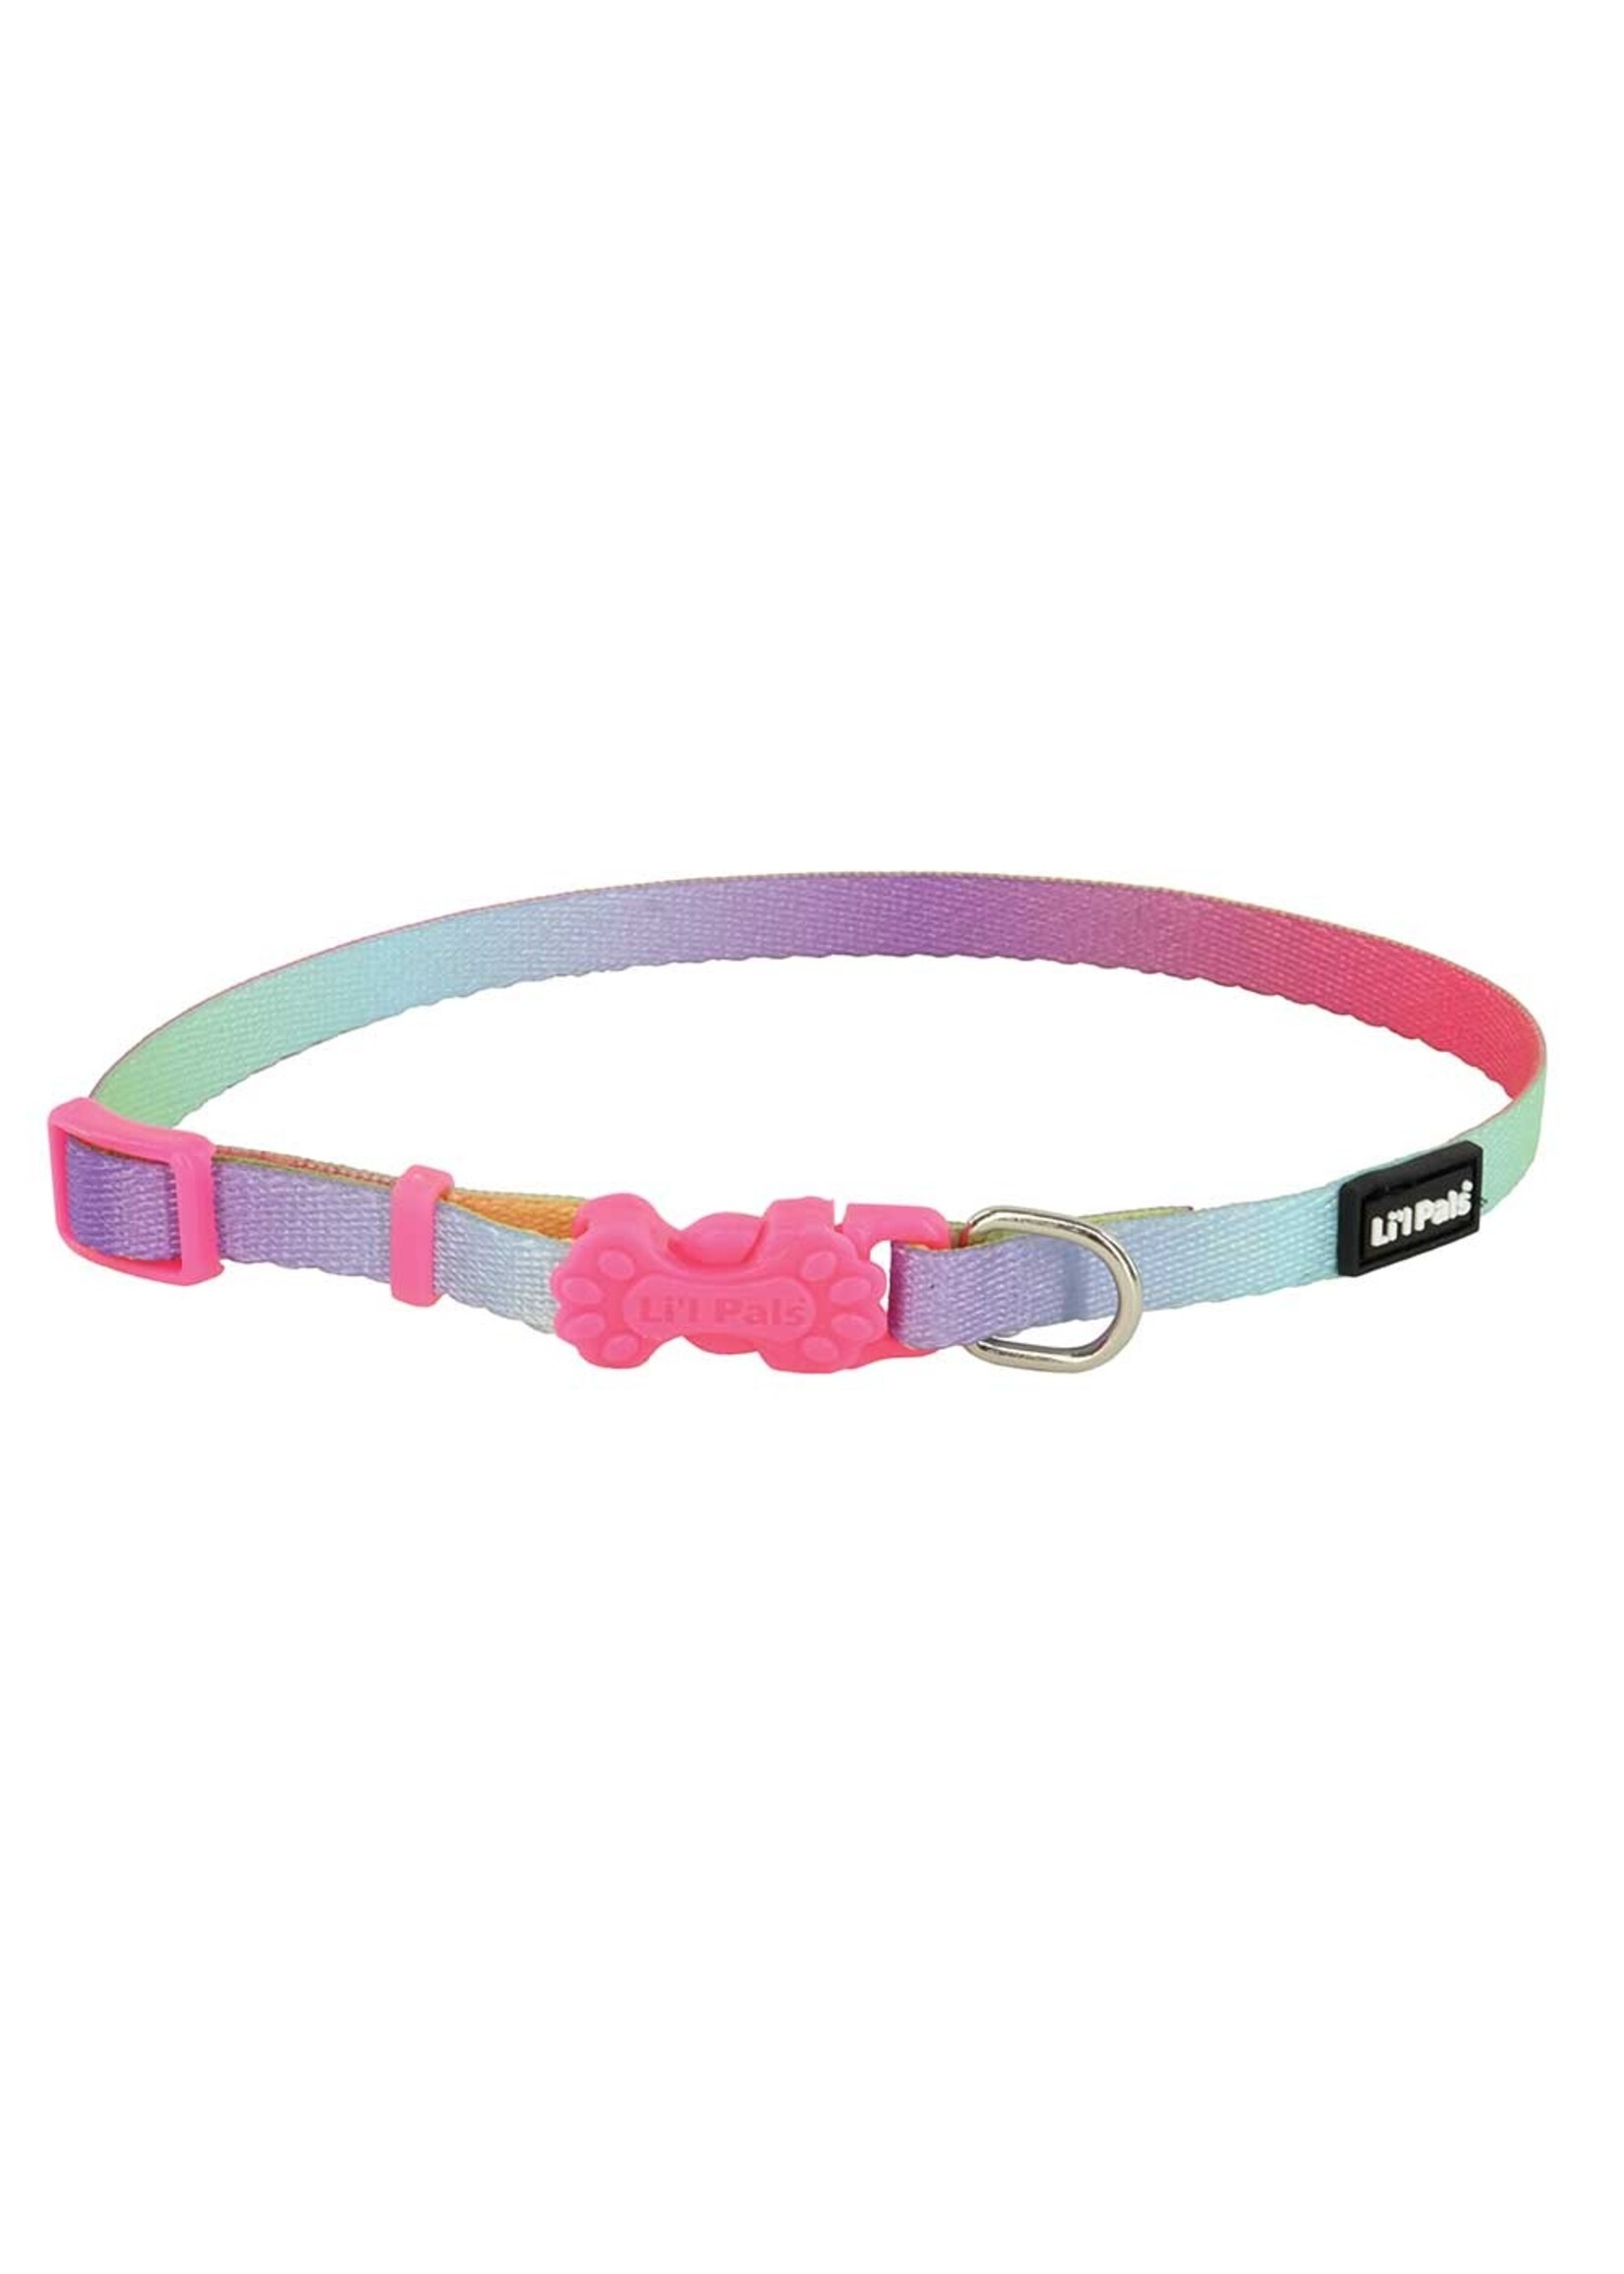 Coastal Pet Products Inc. Li'l Pals Dog Collar Pastel Rainbow Petite 3/8"